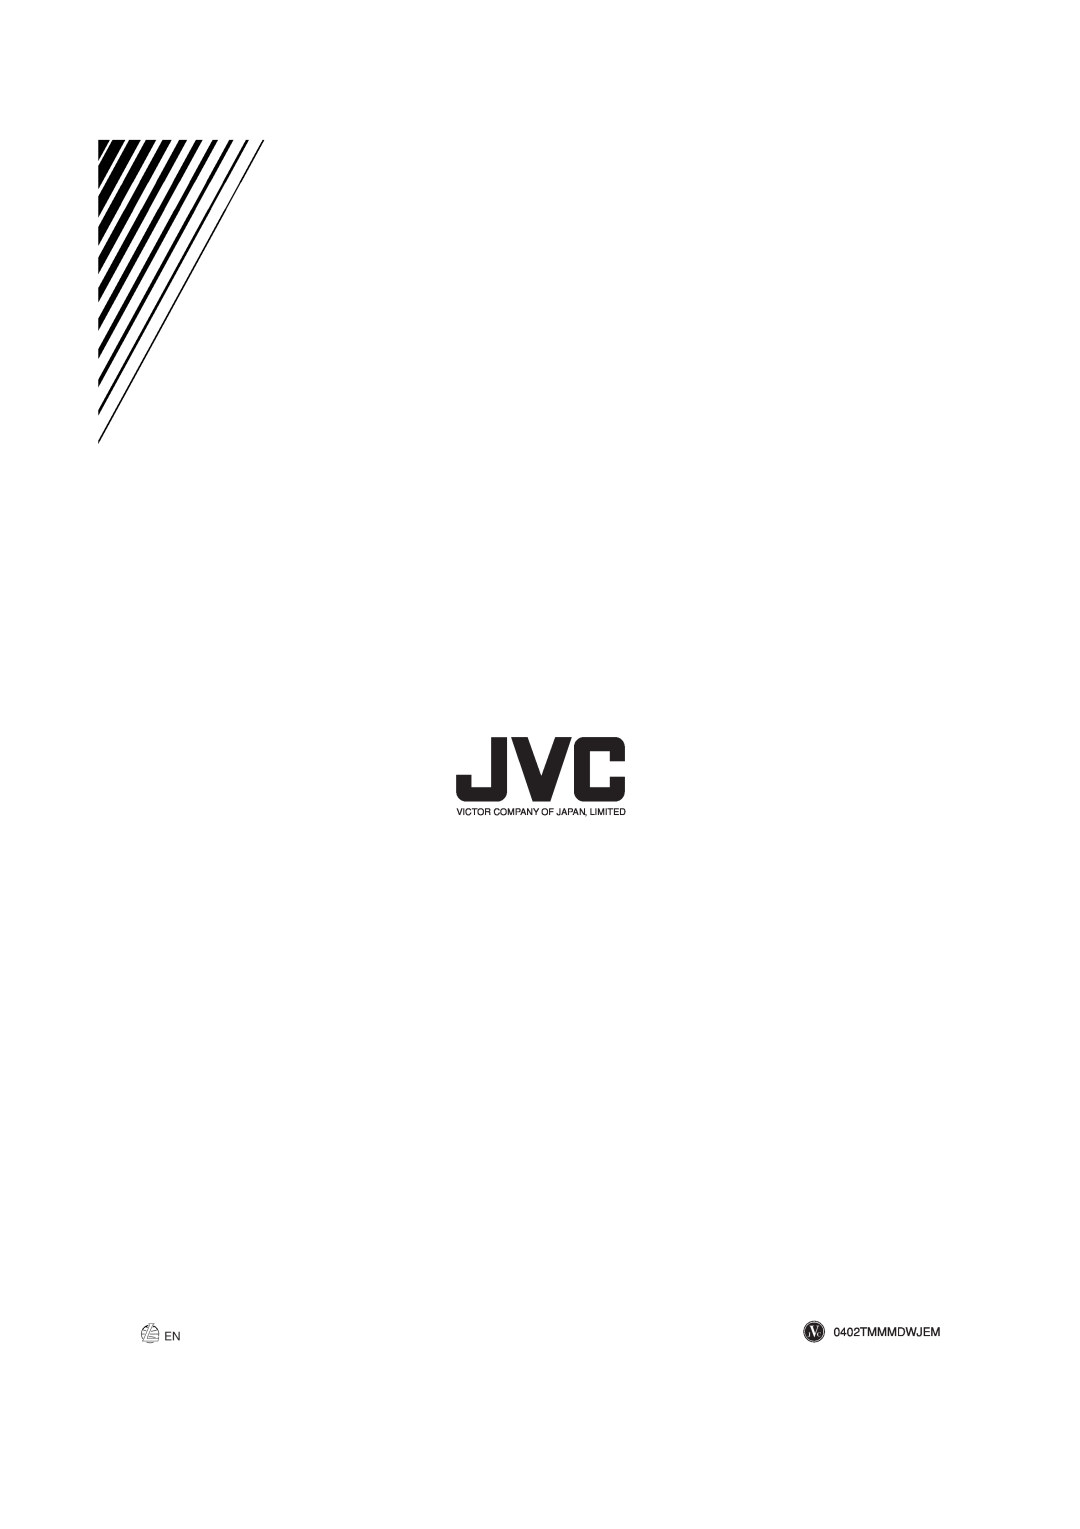 JVC XV-THV70R, LVT0865-004A, SP-XCV70 manual 0402TMMMDWJEM, Victor Company Of Japan, Limited 